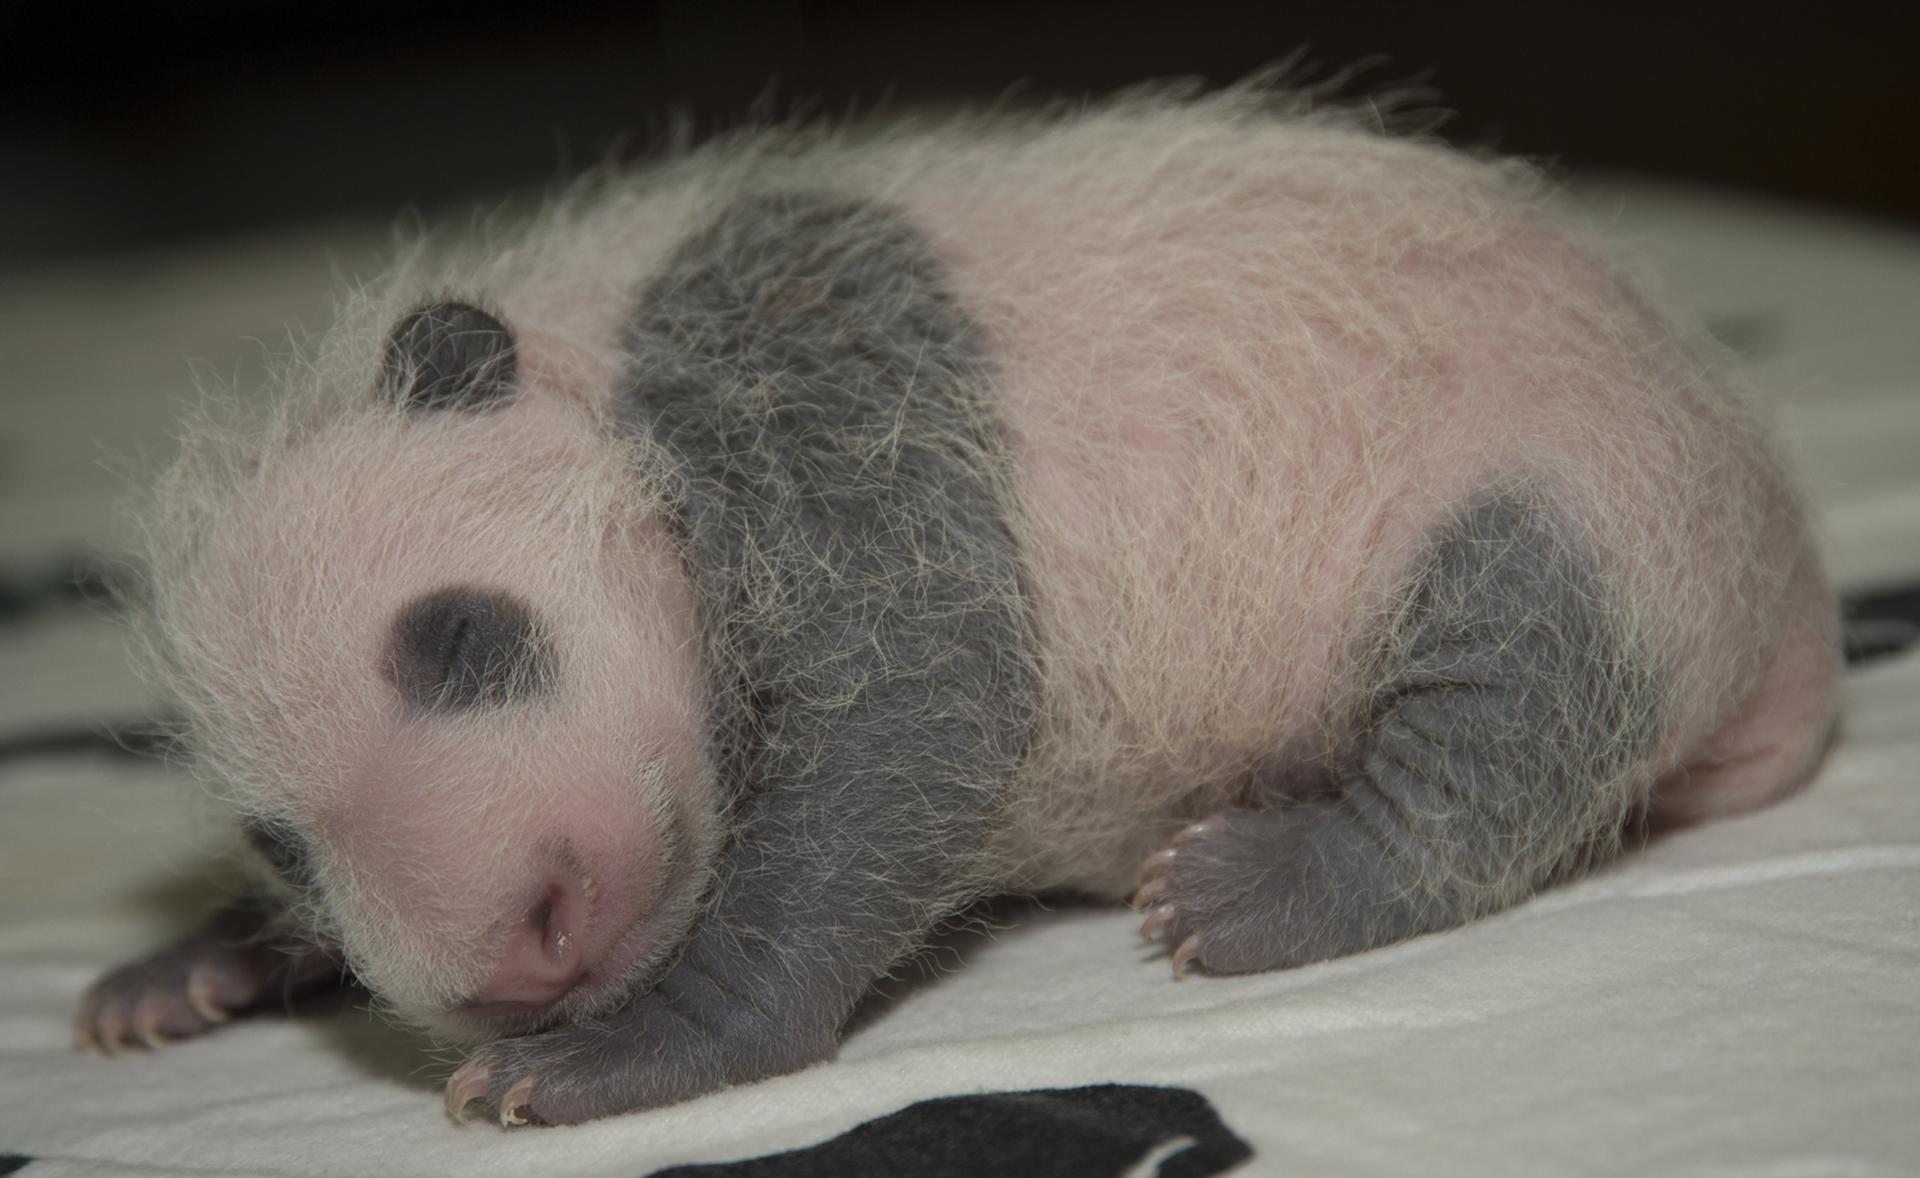 A fuzzy black and white baby panda